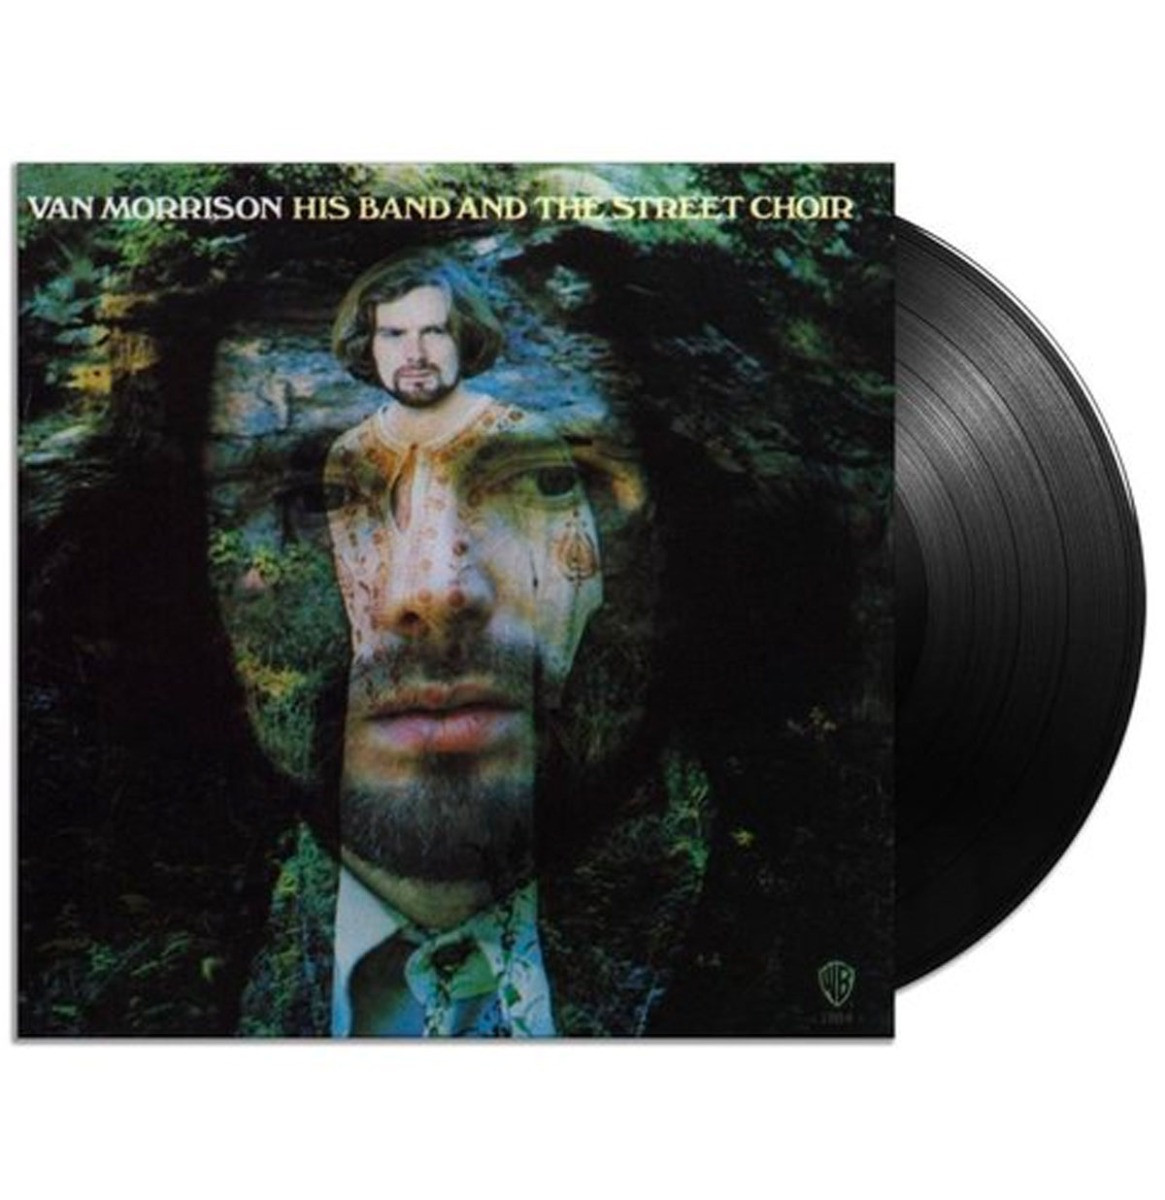 Van Morrison - His Band And The Street Choir LP